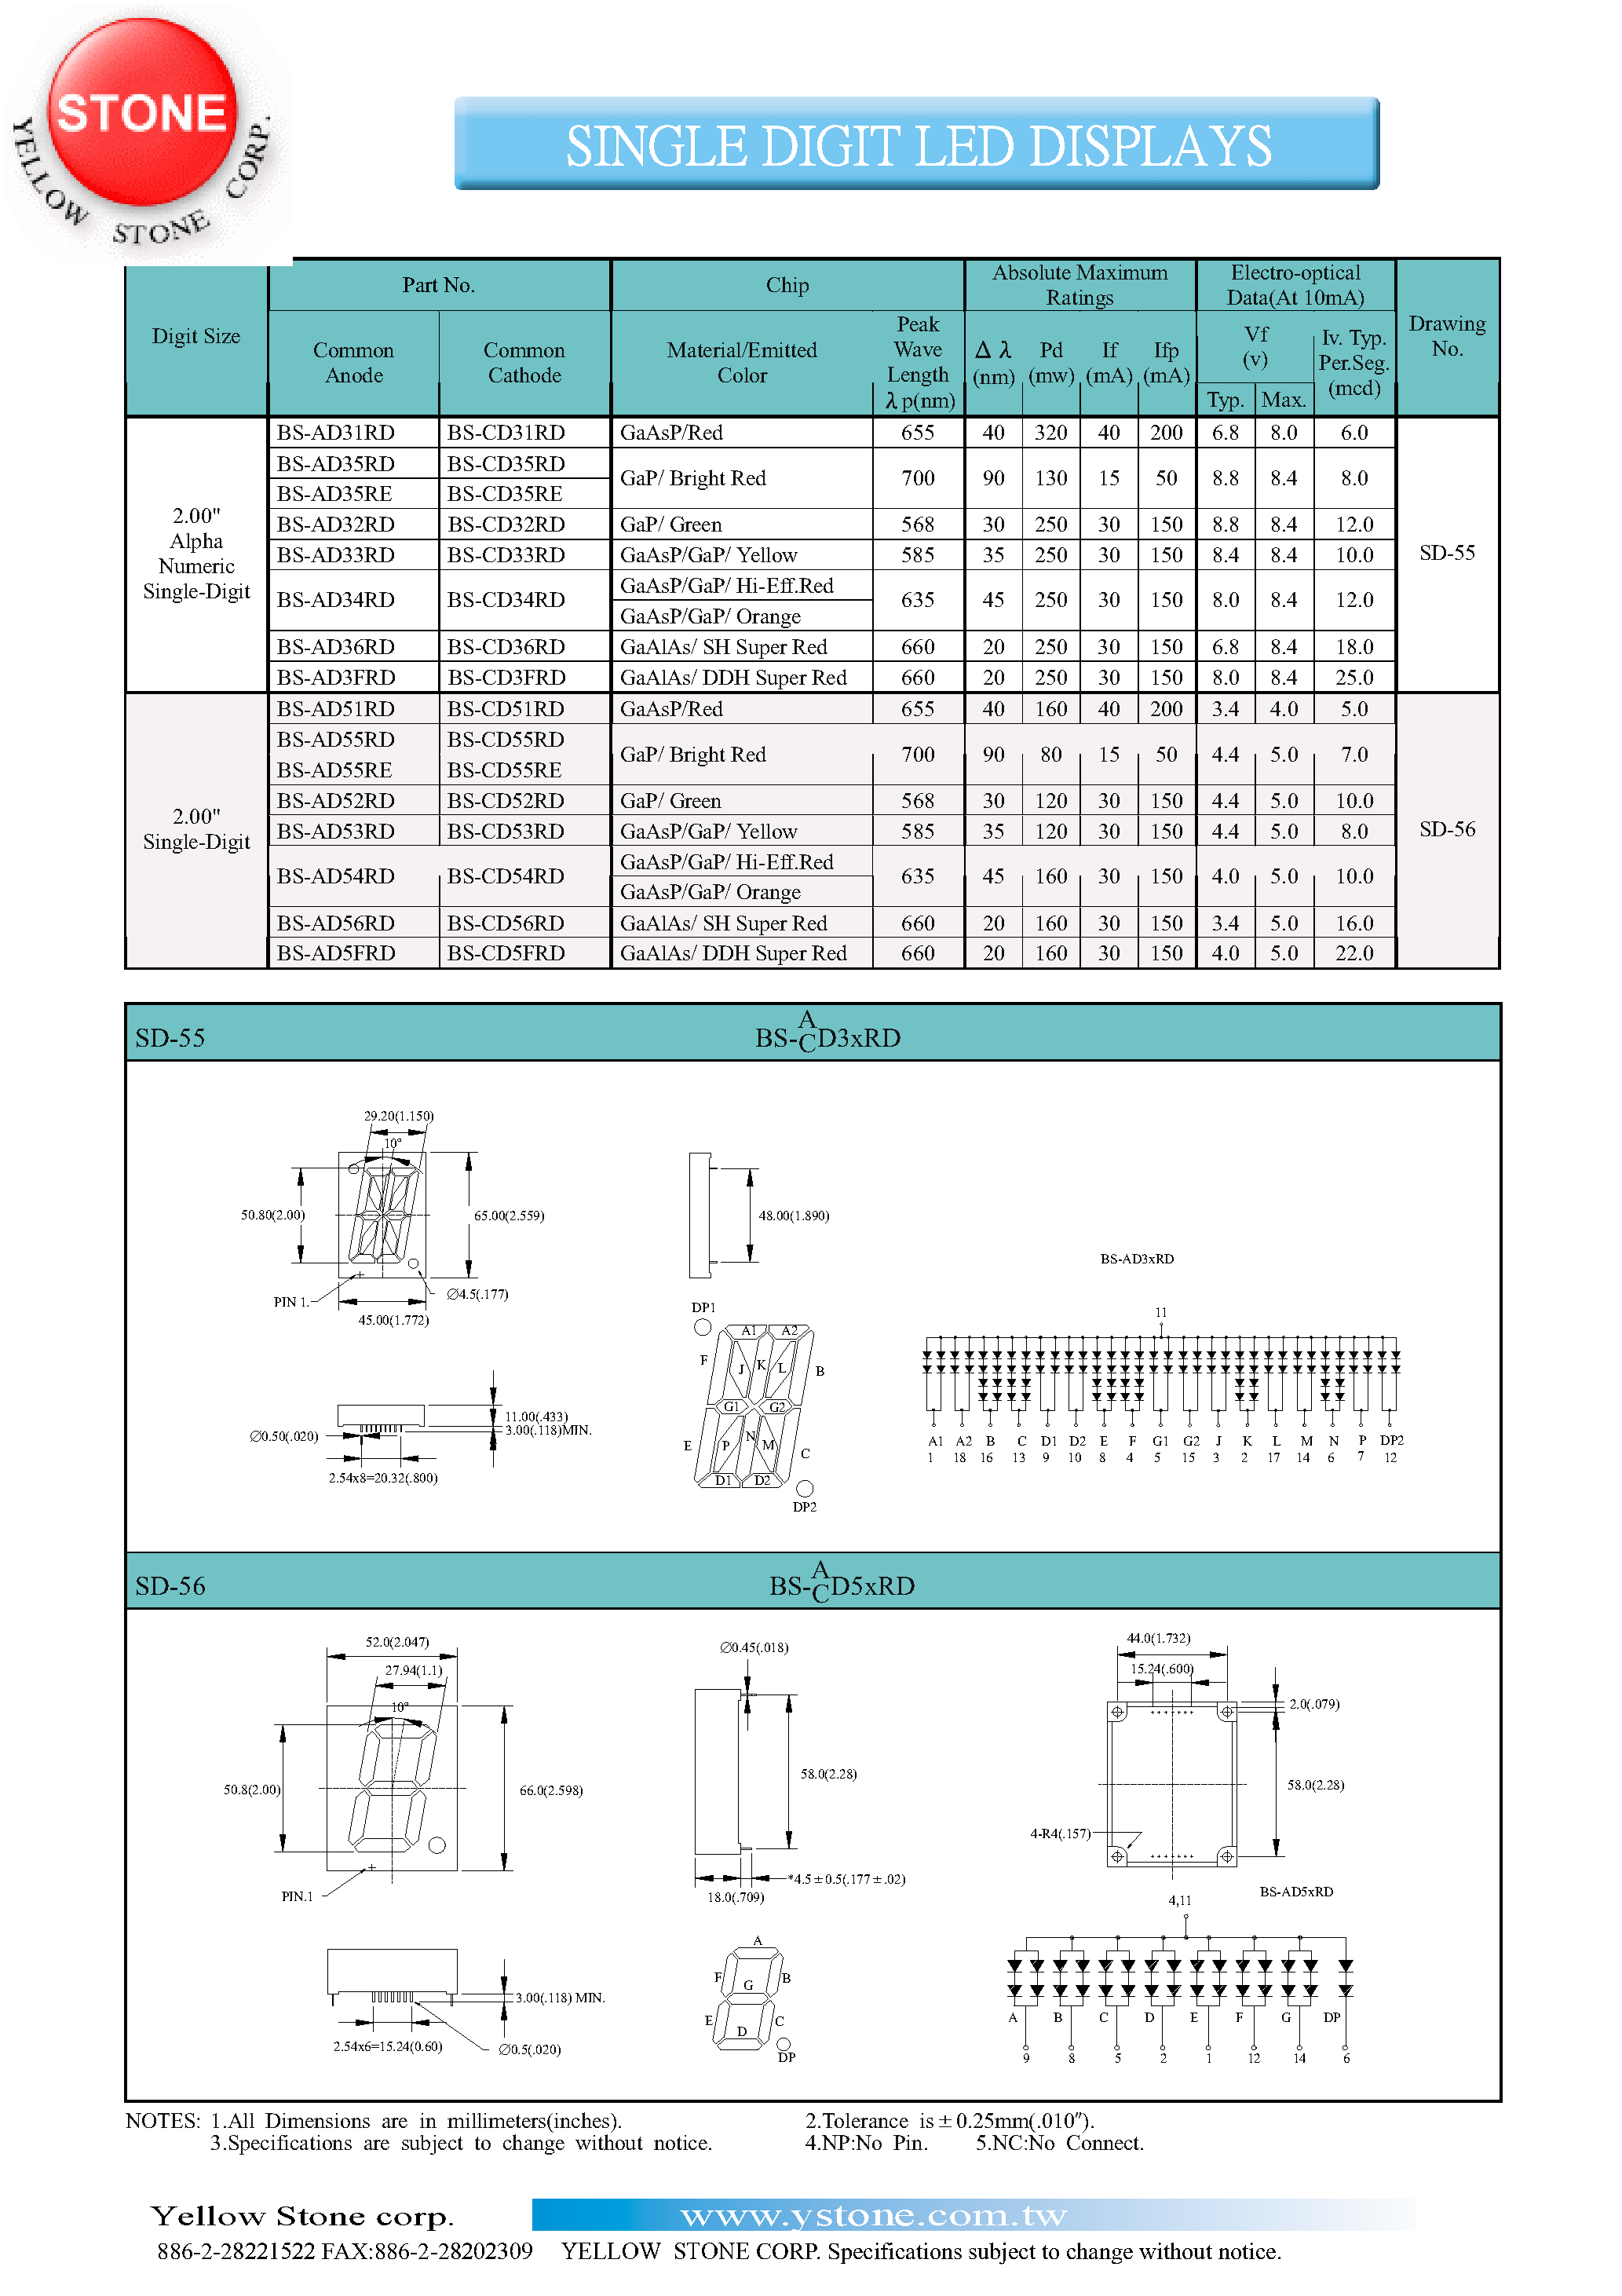 Datasheet BS-AD32RD - SINGLE DIGIT LED DISPLAYS page 1